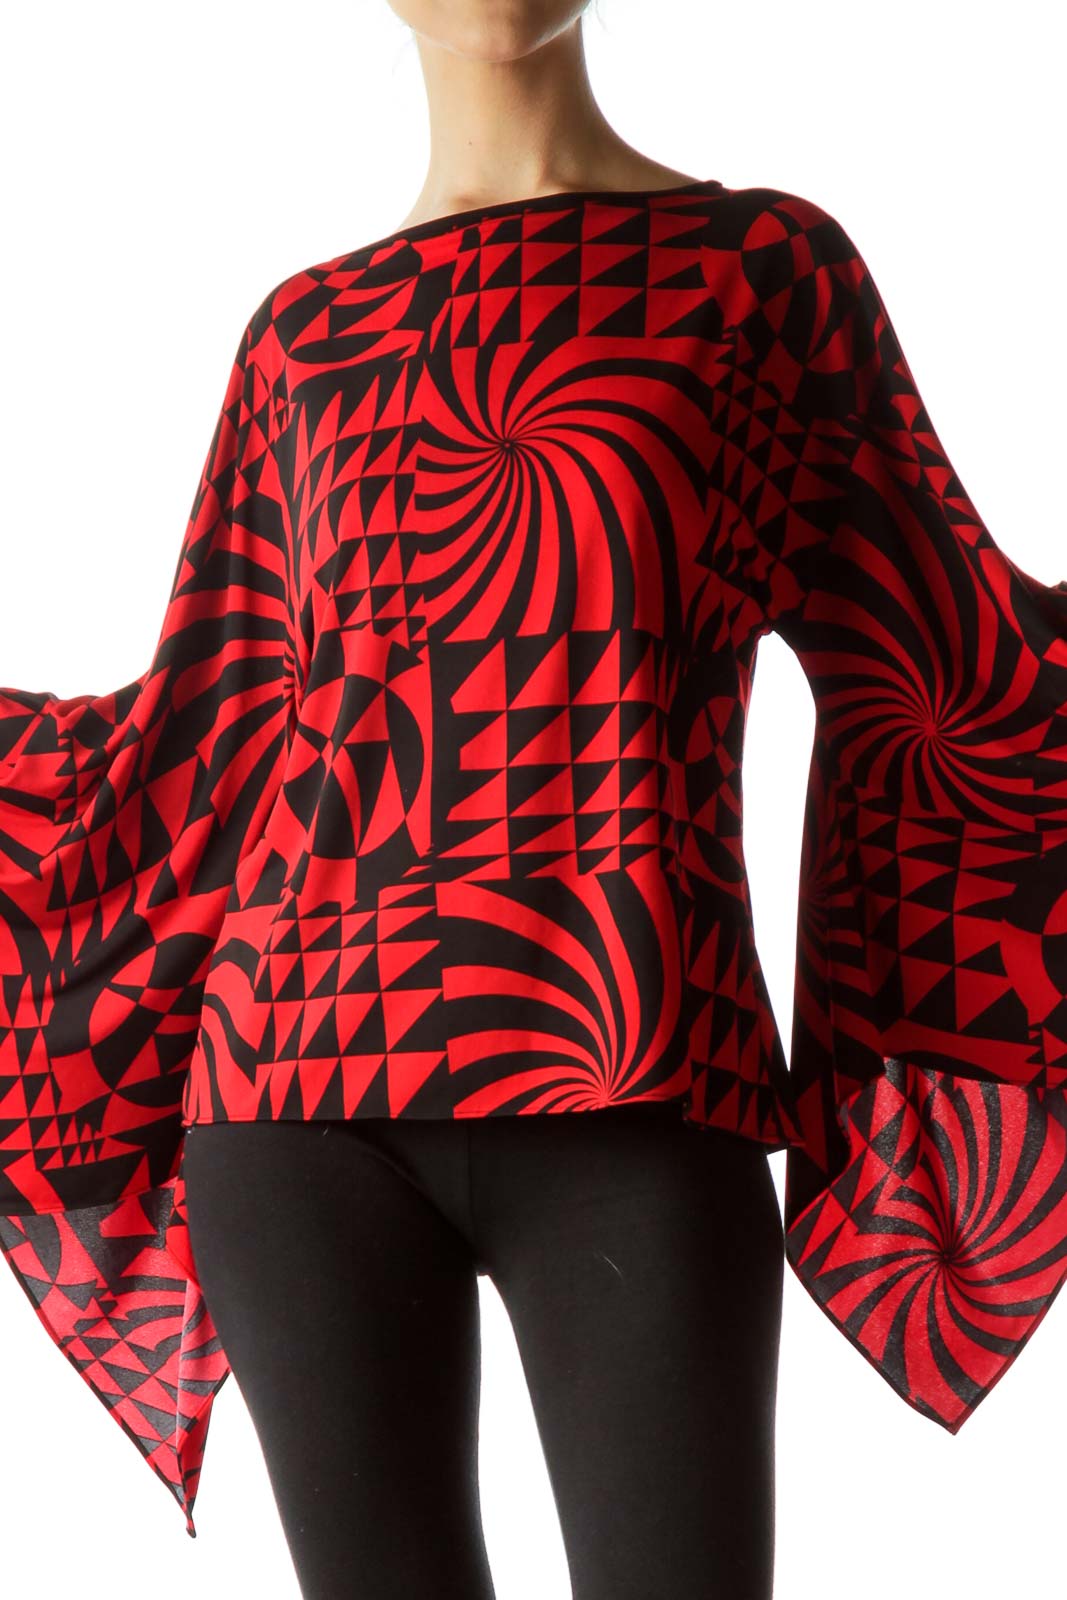 Red Black Geometric Print Wide Sleeves Top Front